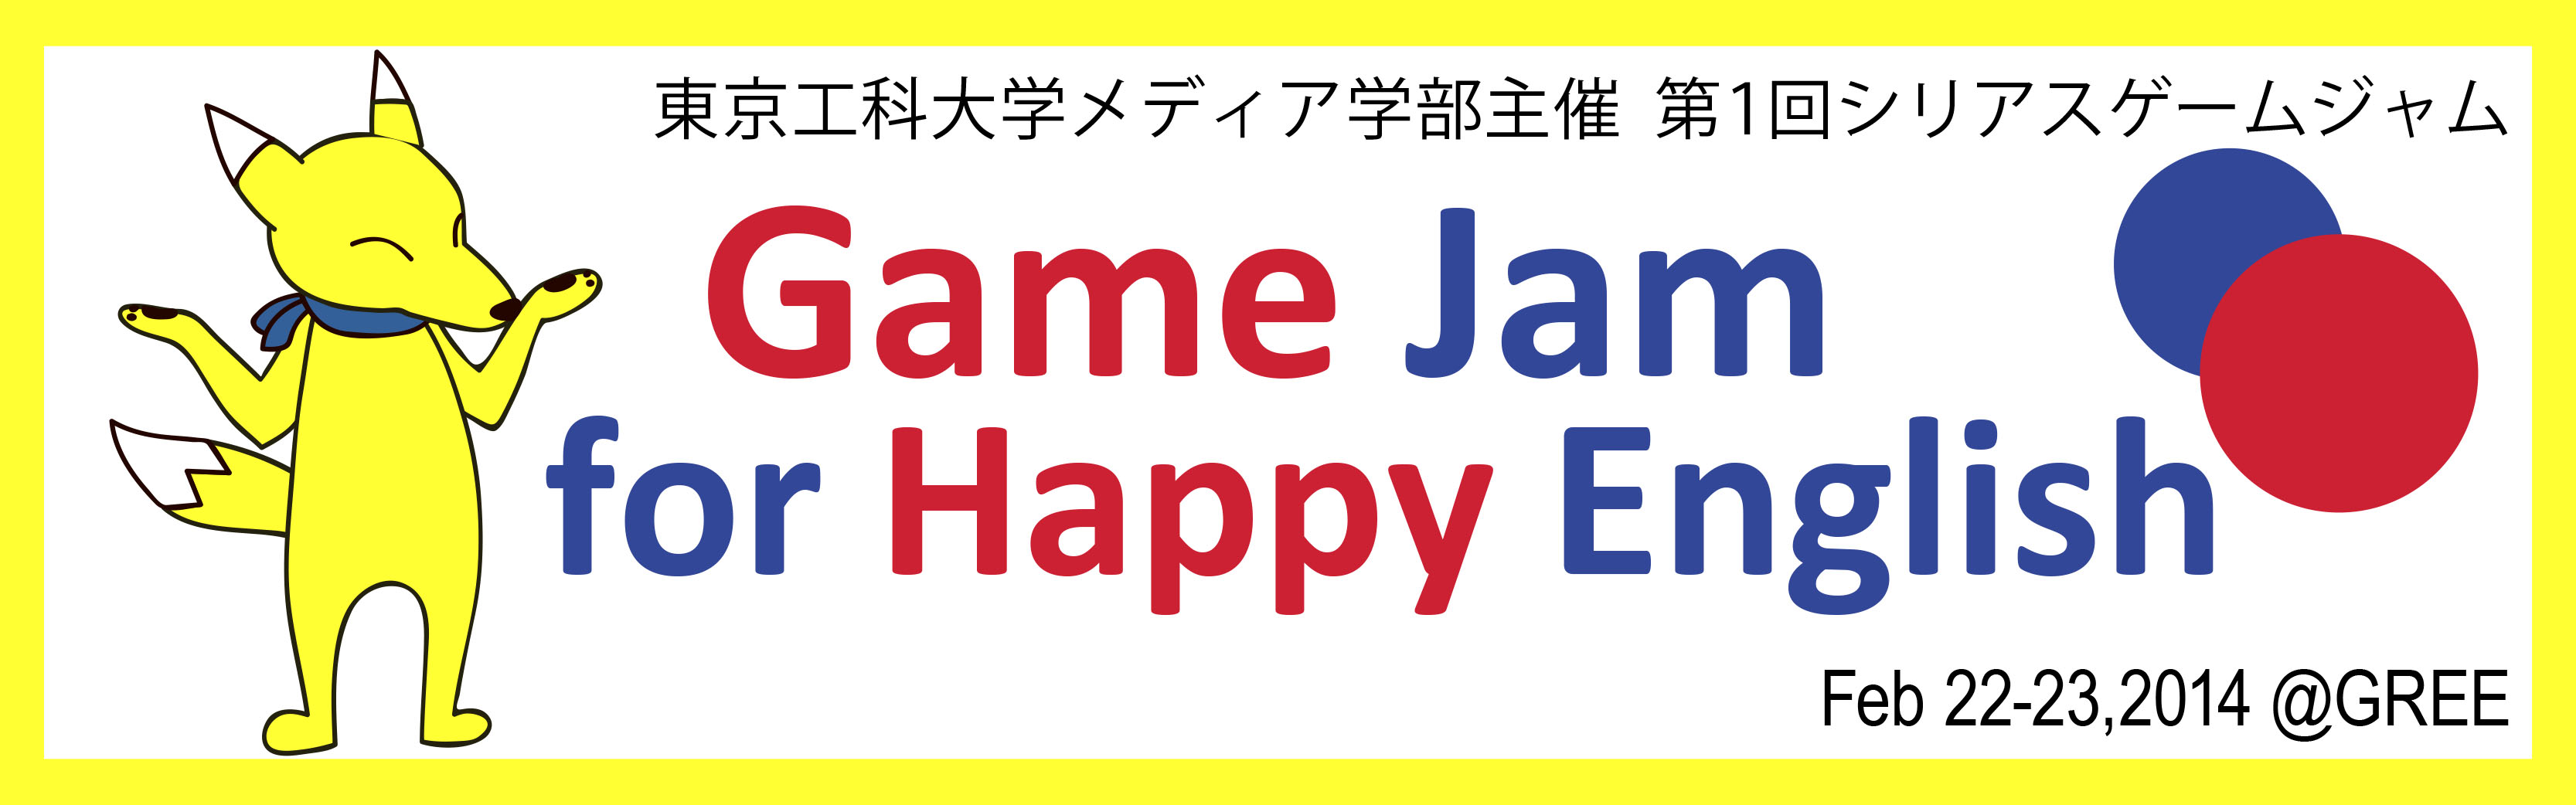 Global Game Jam 2014 - Welcome